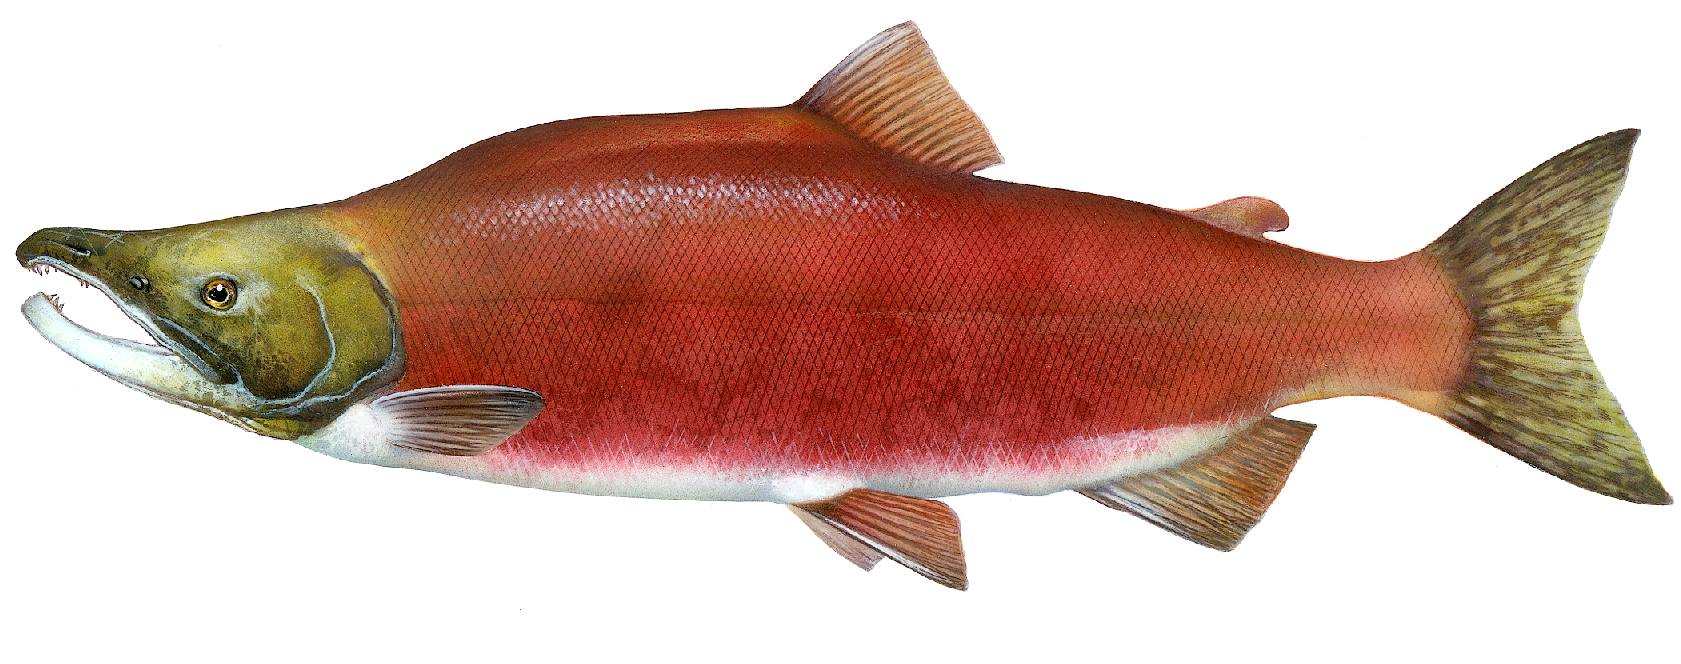 SALMON - Oncorhynchus nerka, spawning sockey salmon